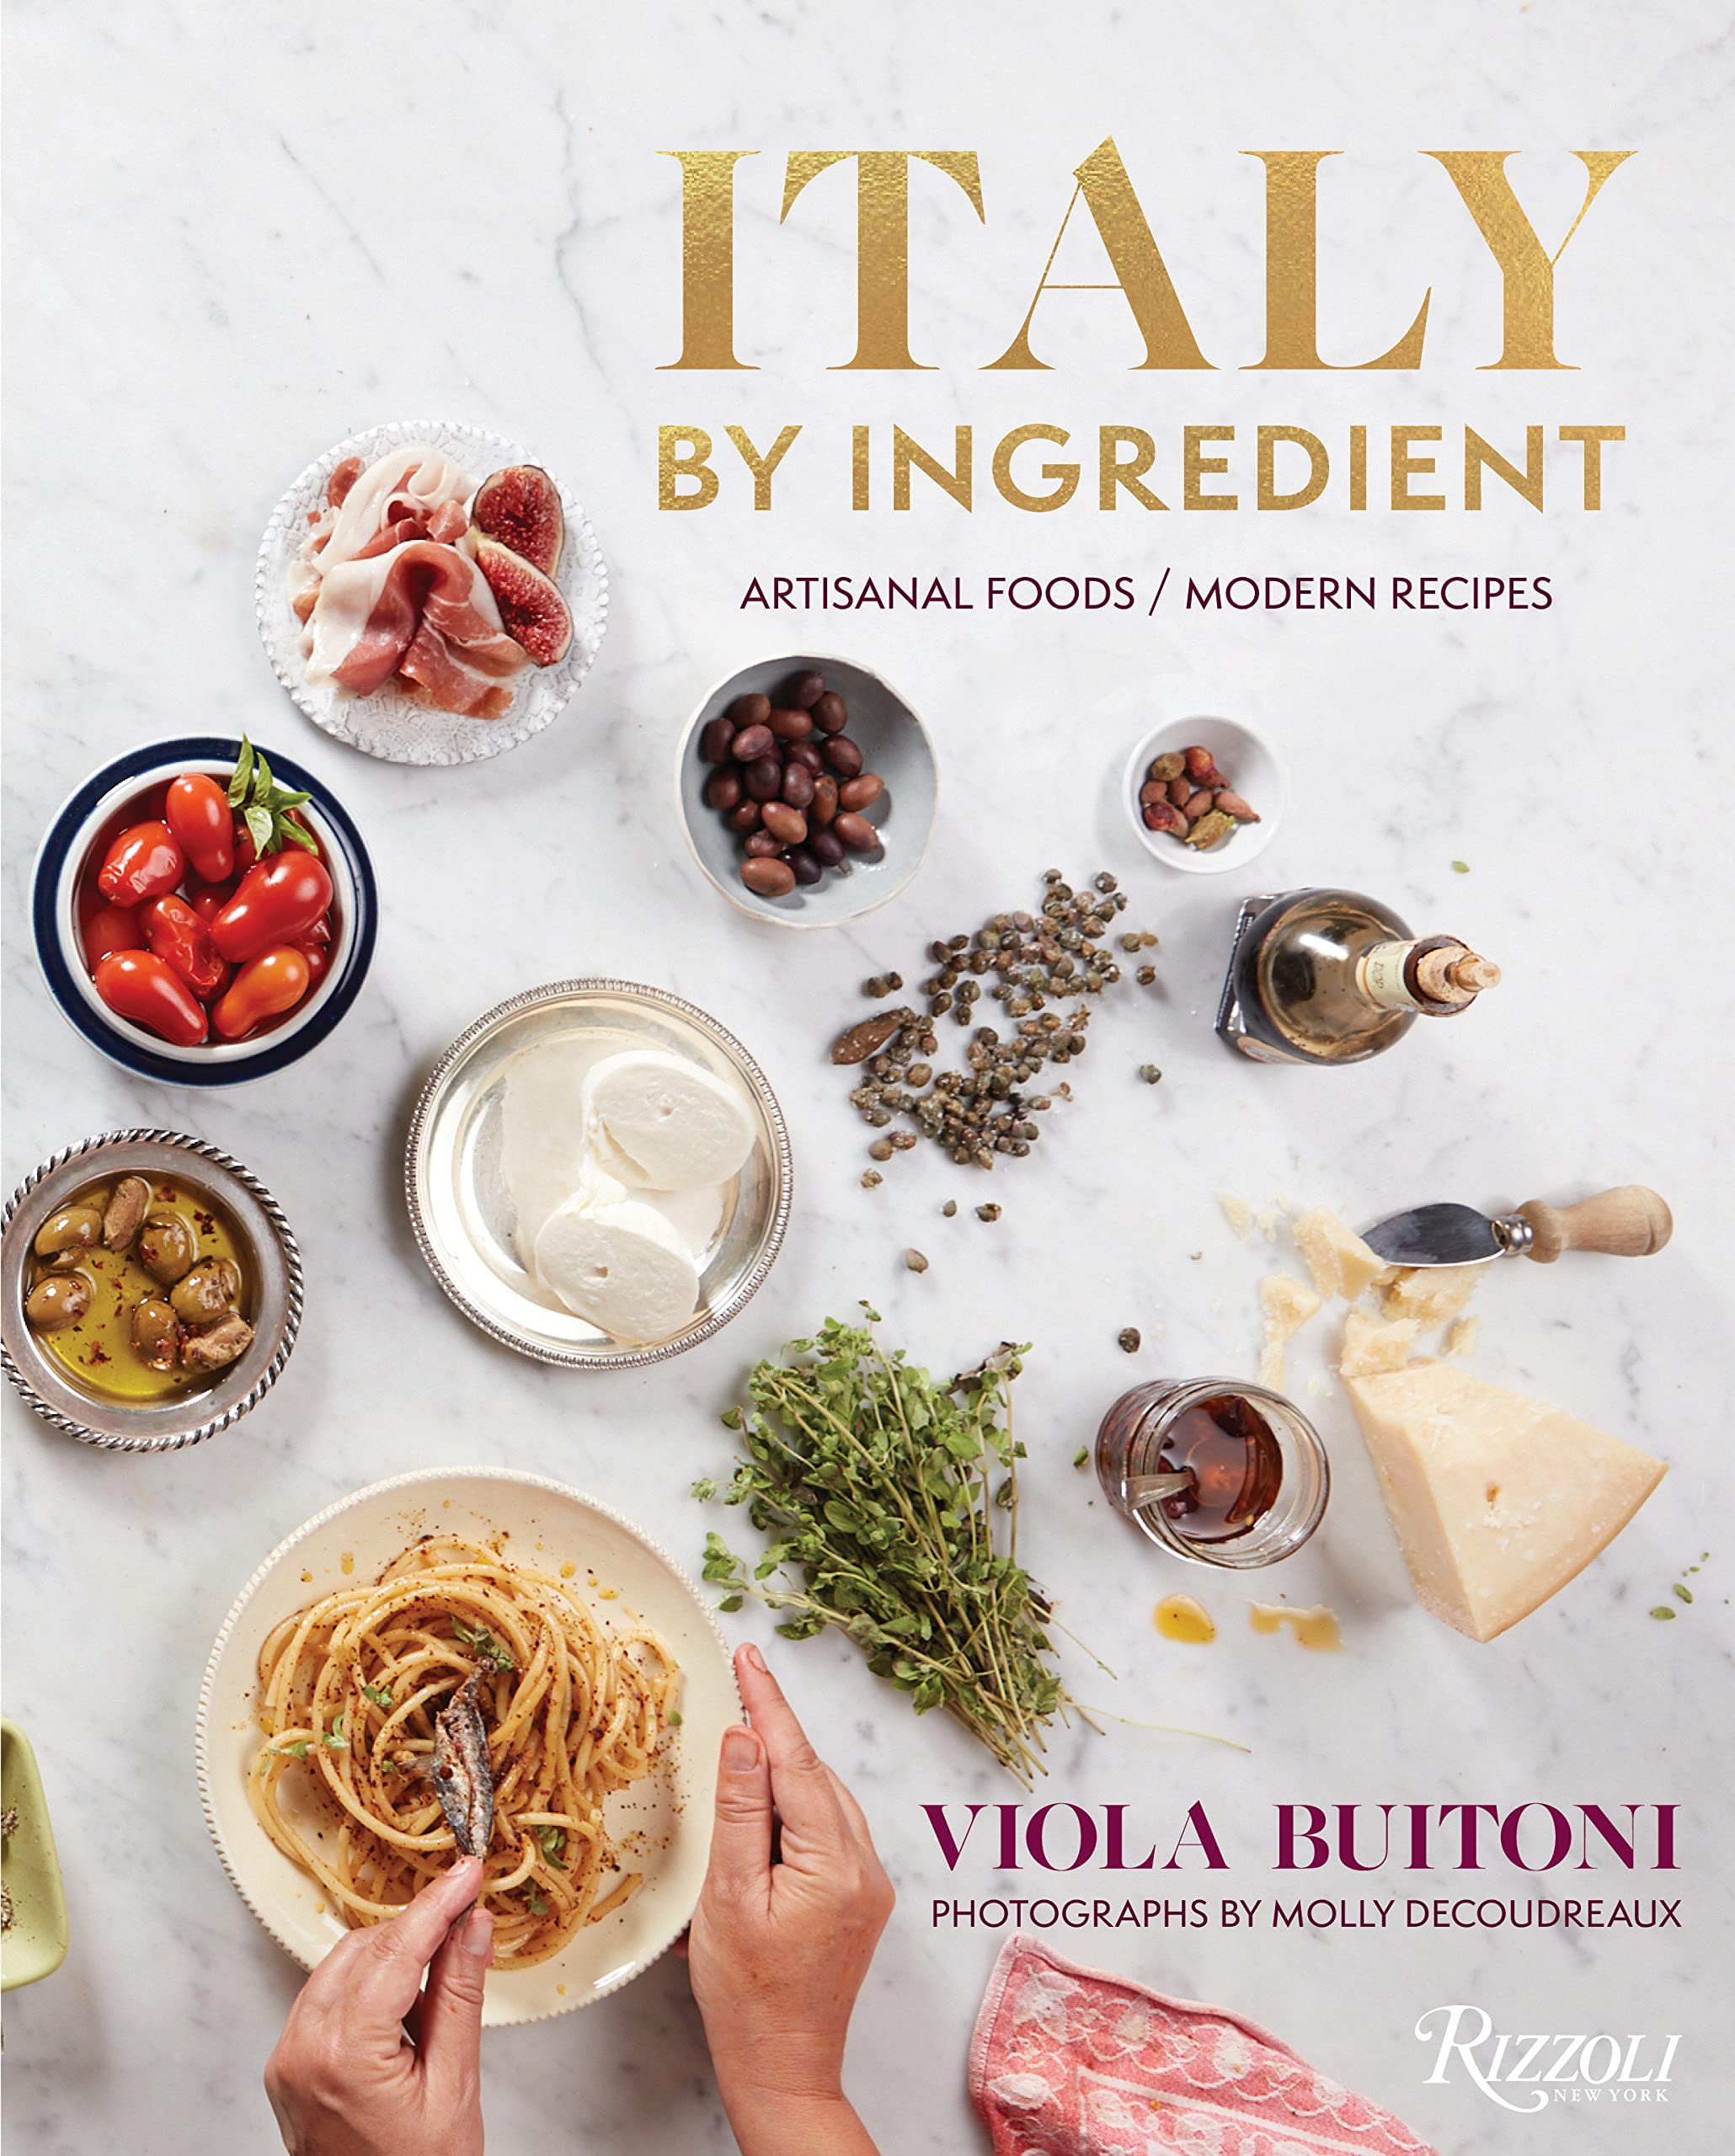 Italy by Ingredient: Artisanal Foods, Modern Recipes (Viola Buitoni)